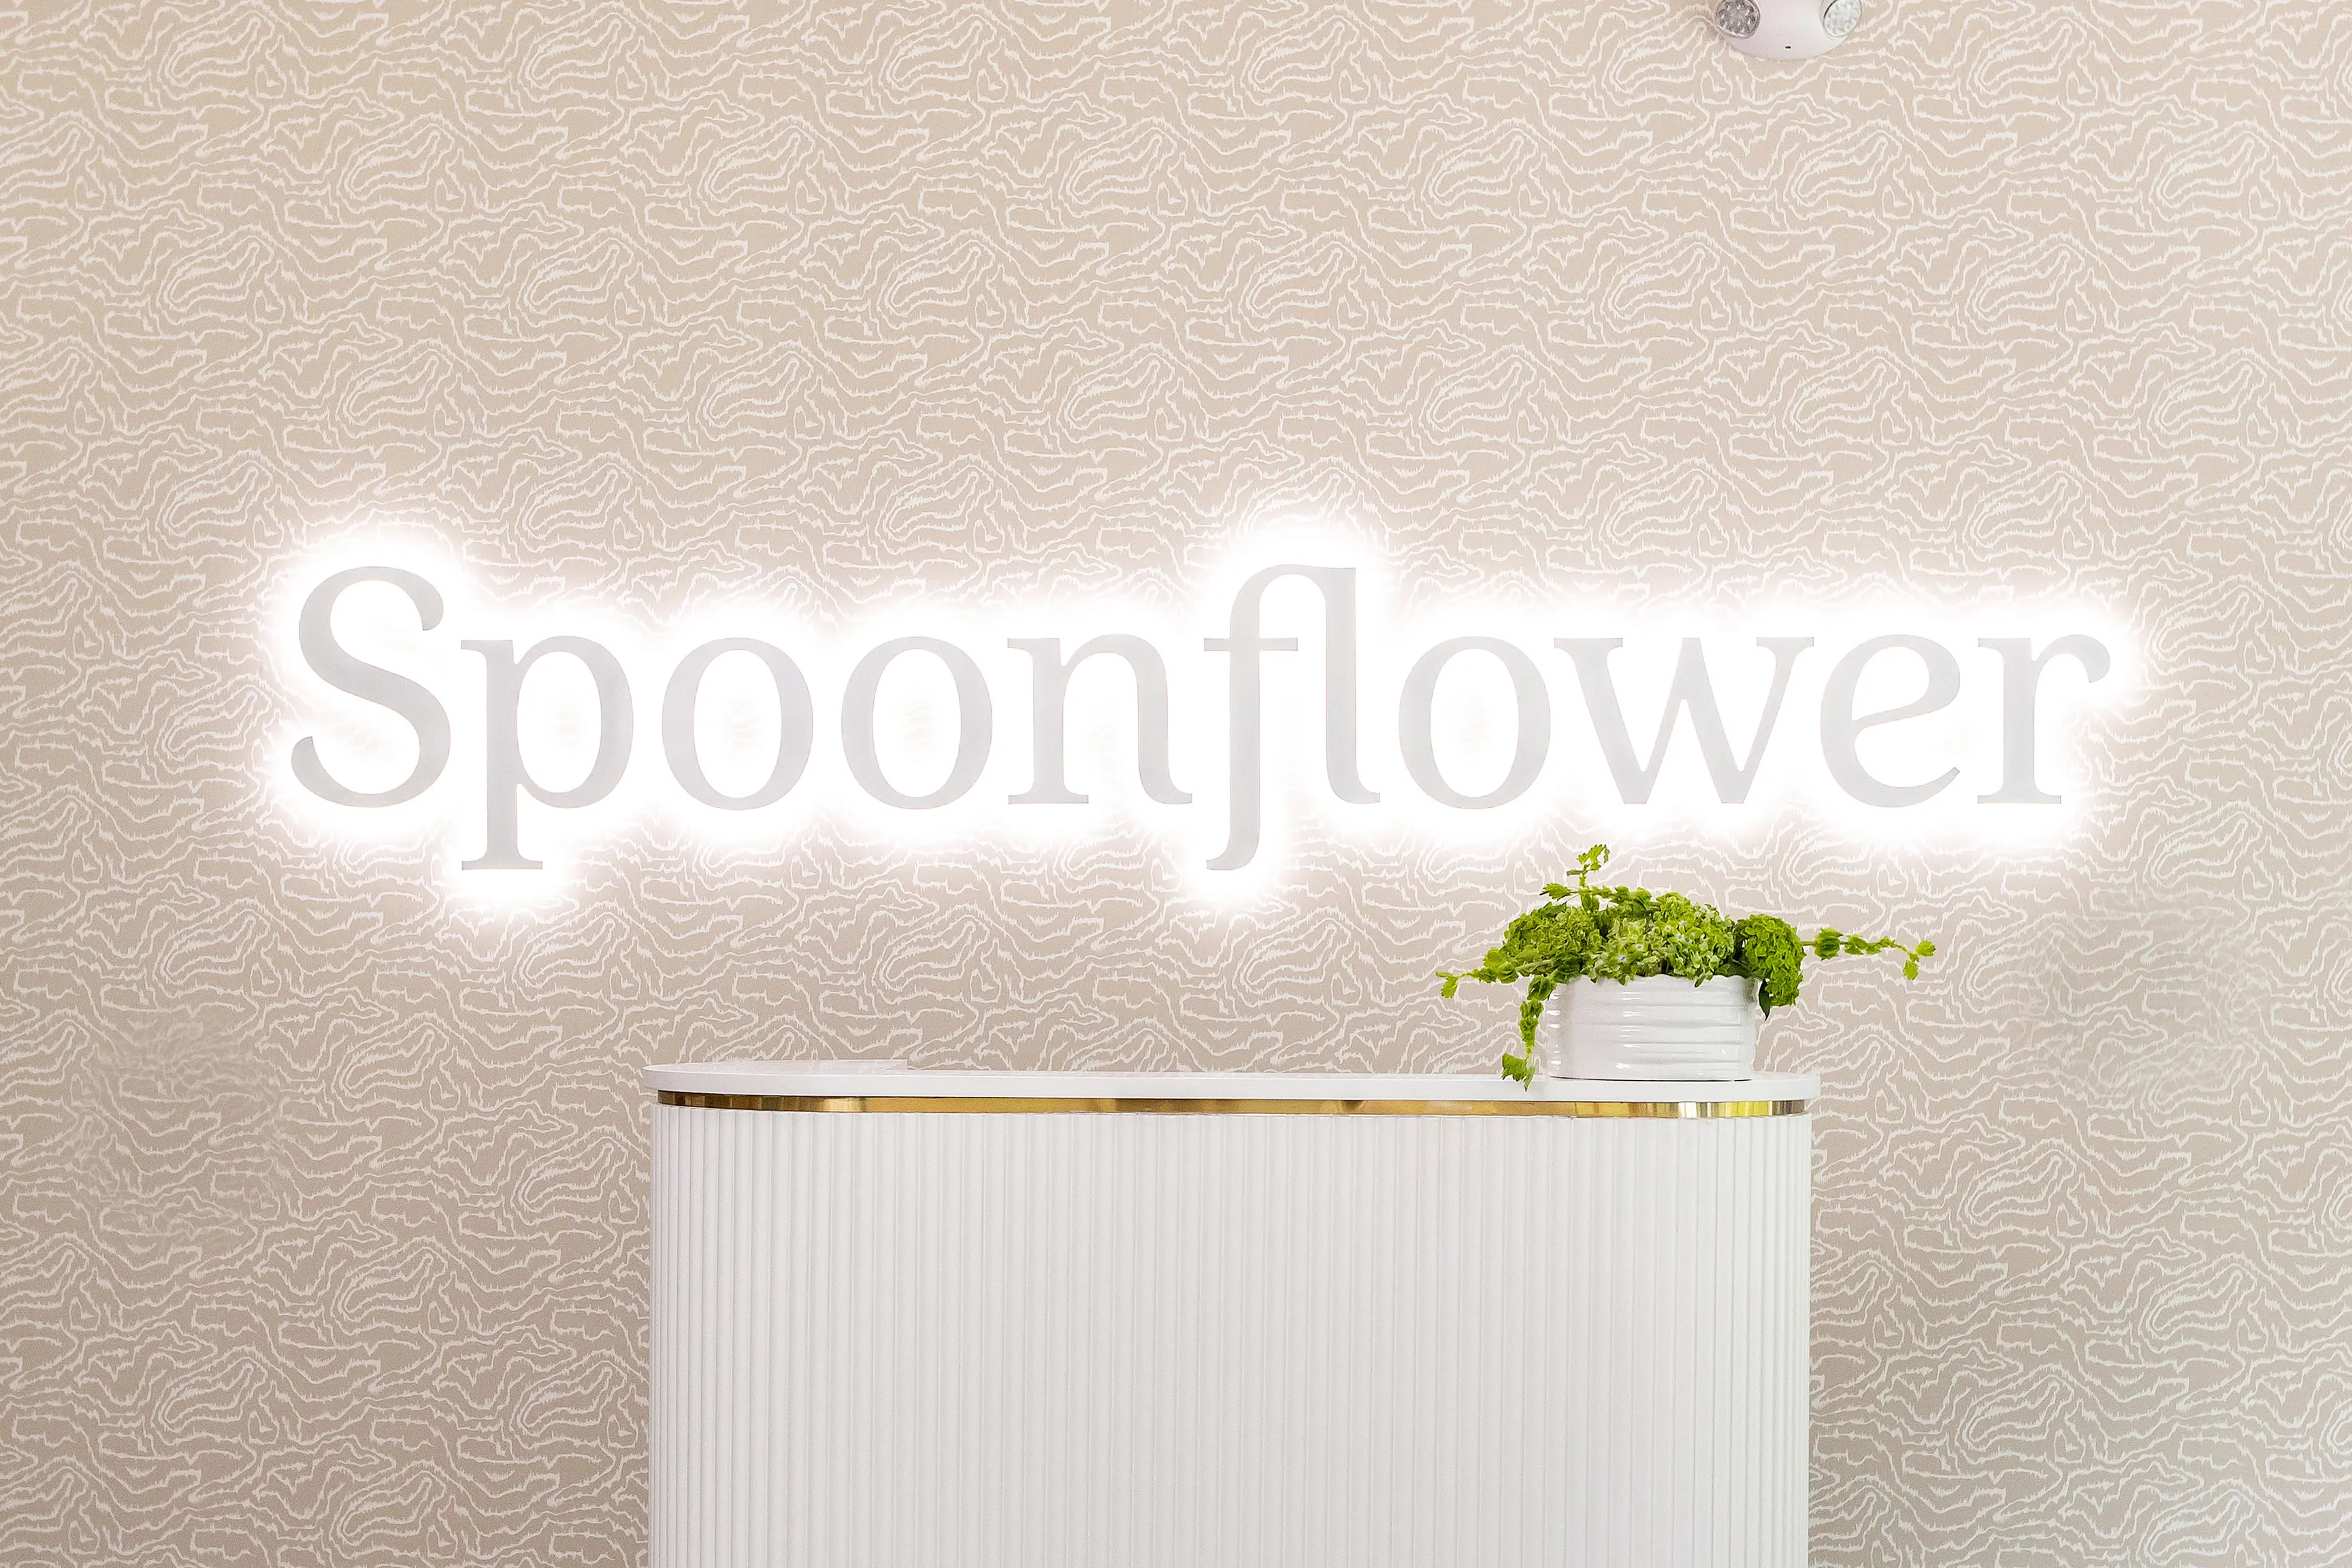 Neon Spoonflower sign above front desk